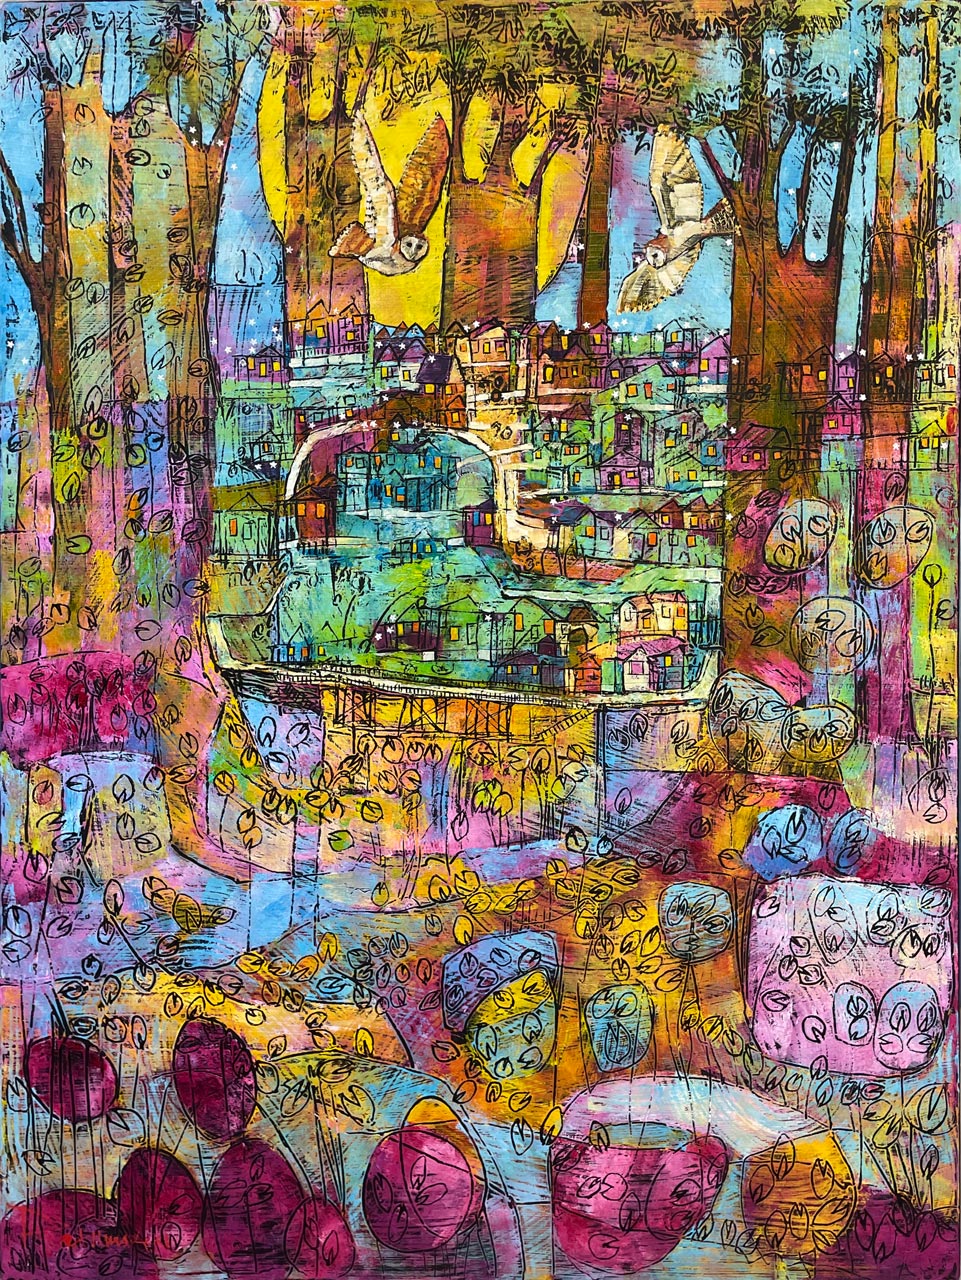 Midsummer Margaret River Dream, oil painting by Ken Rasmussen